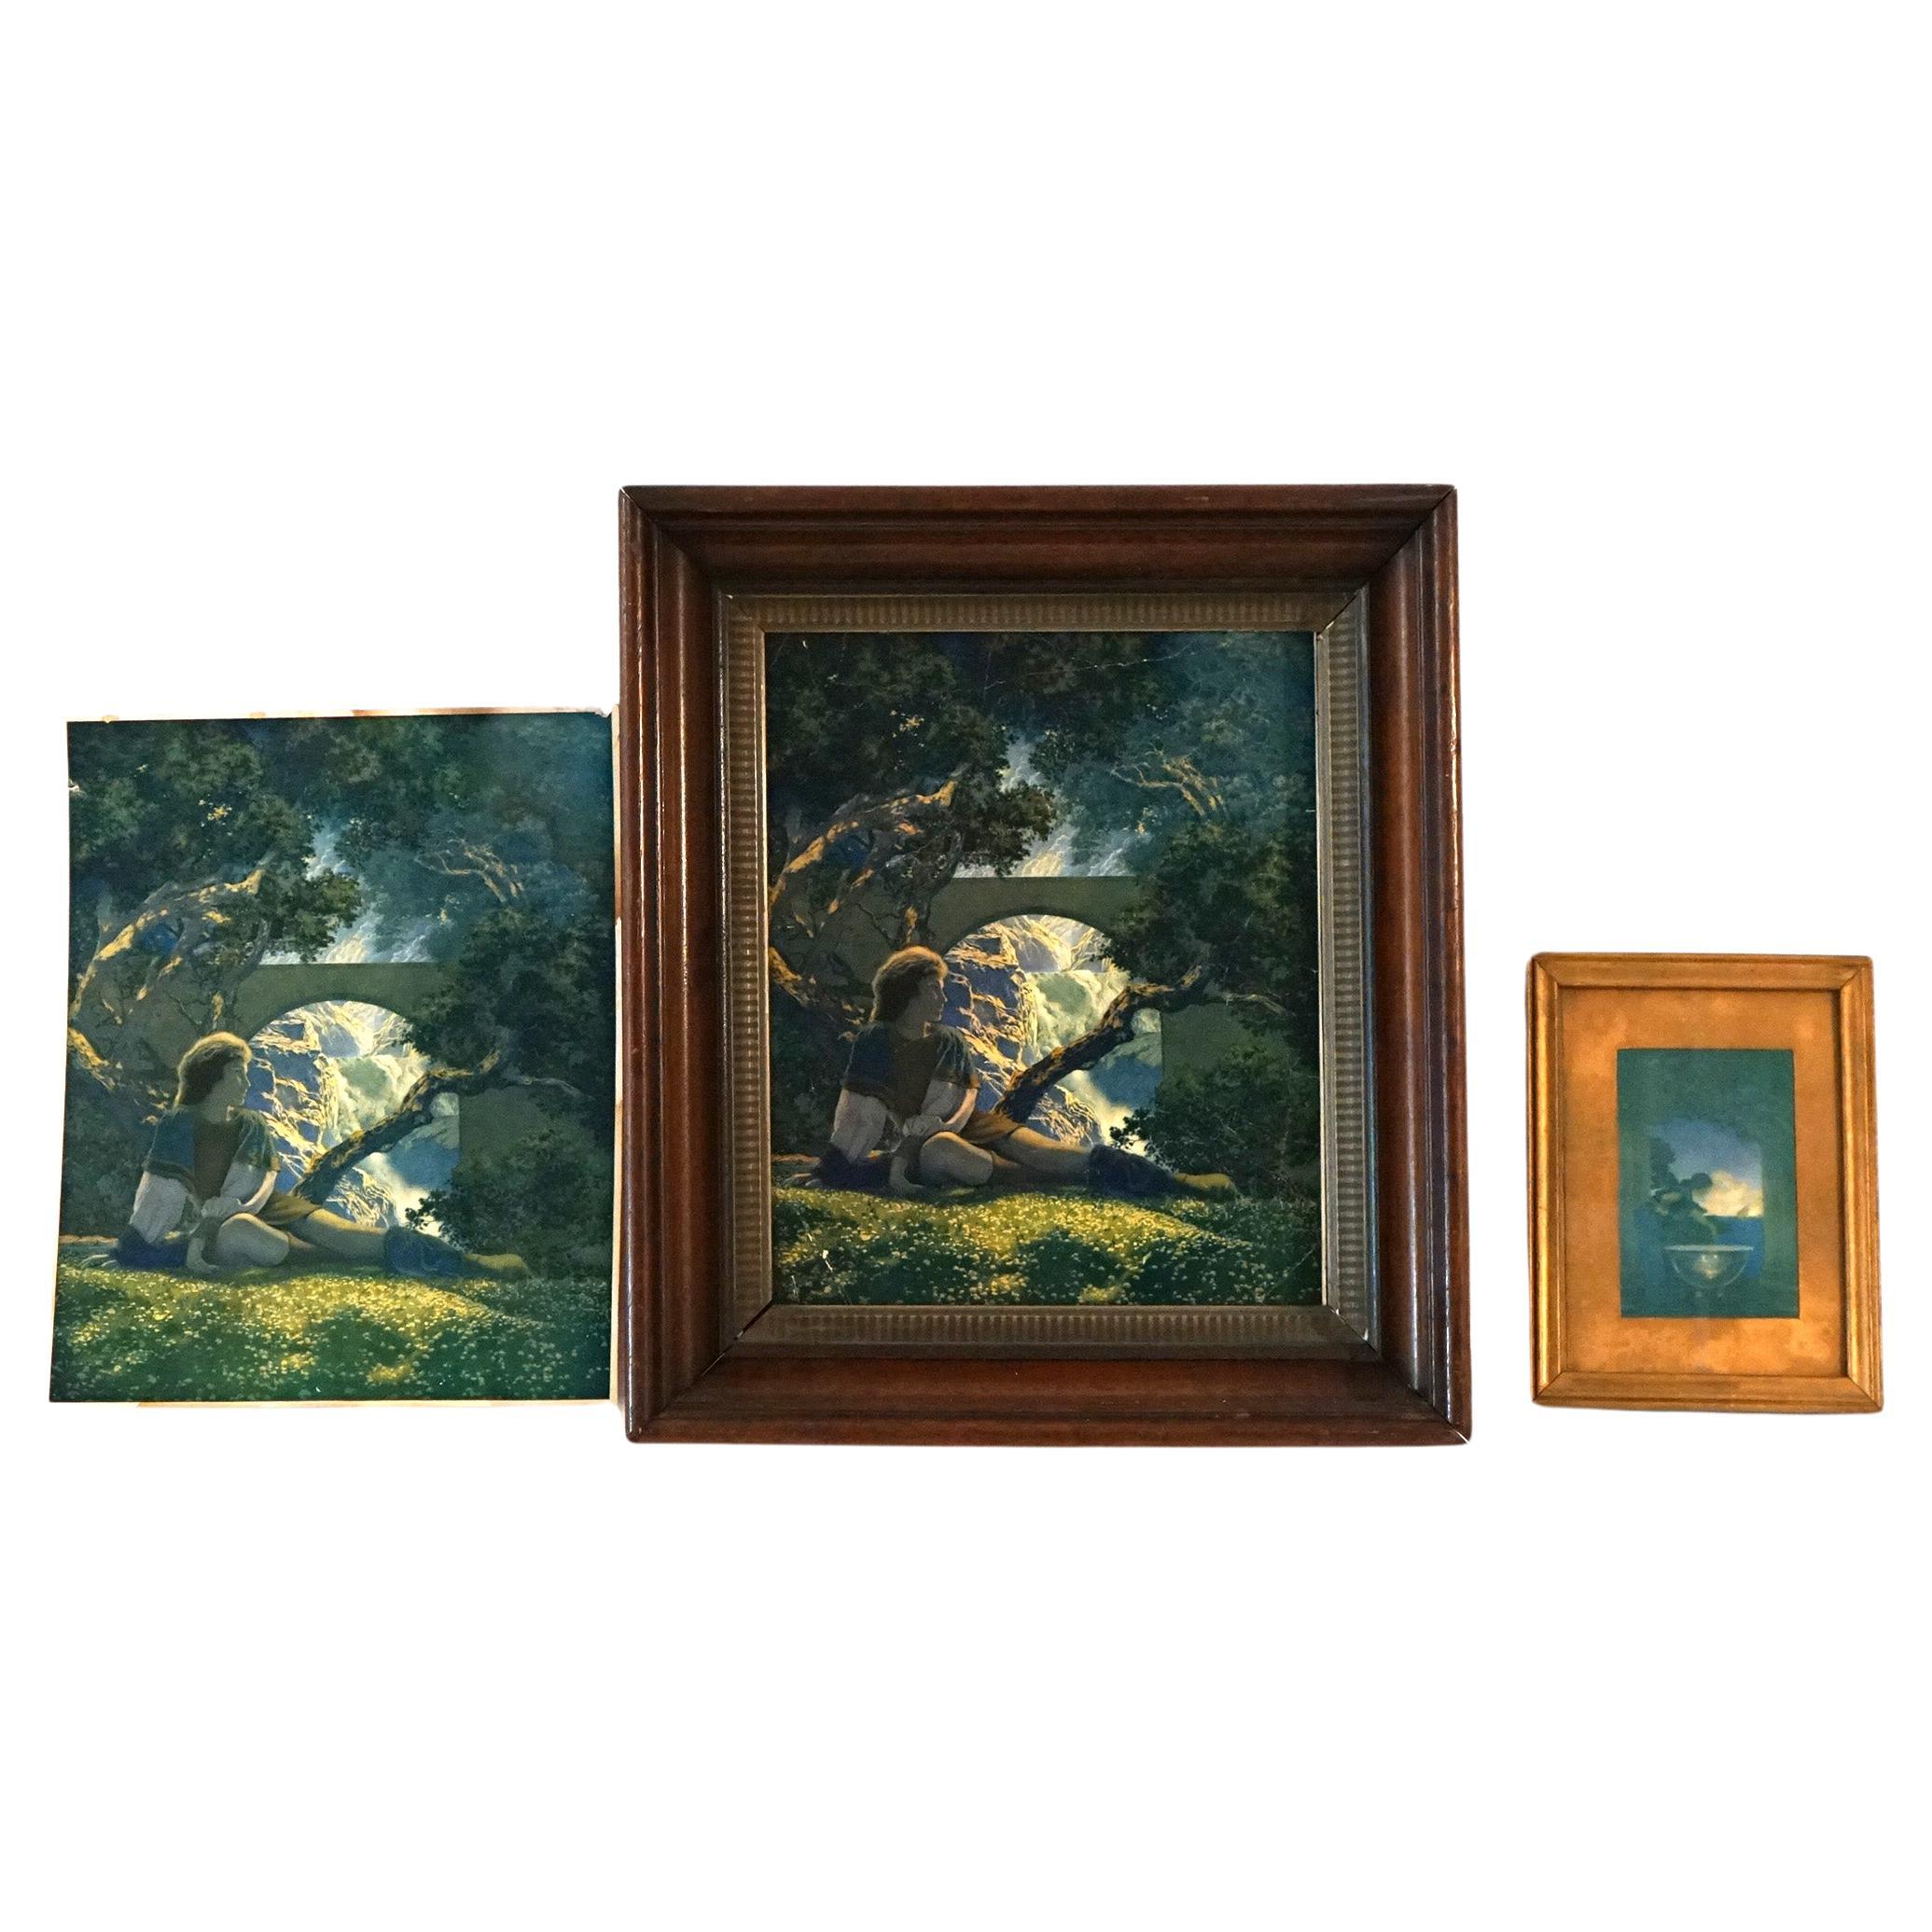 Three Art Deco Maxfield Parrish Prints Including “The Prince” C1920